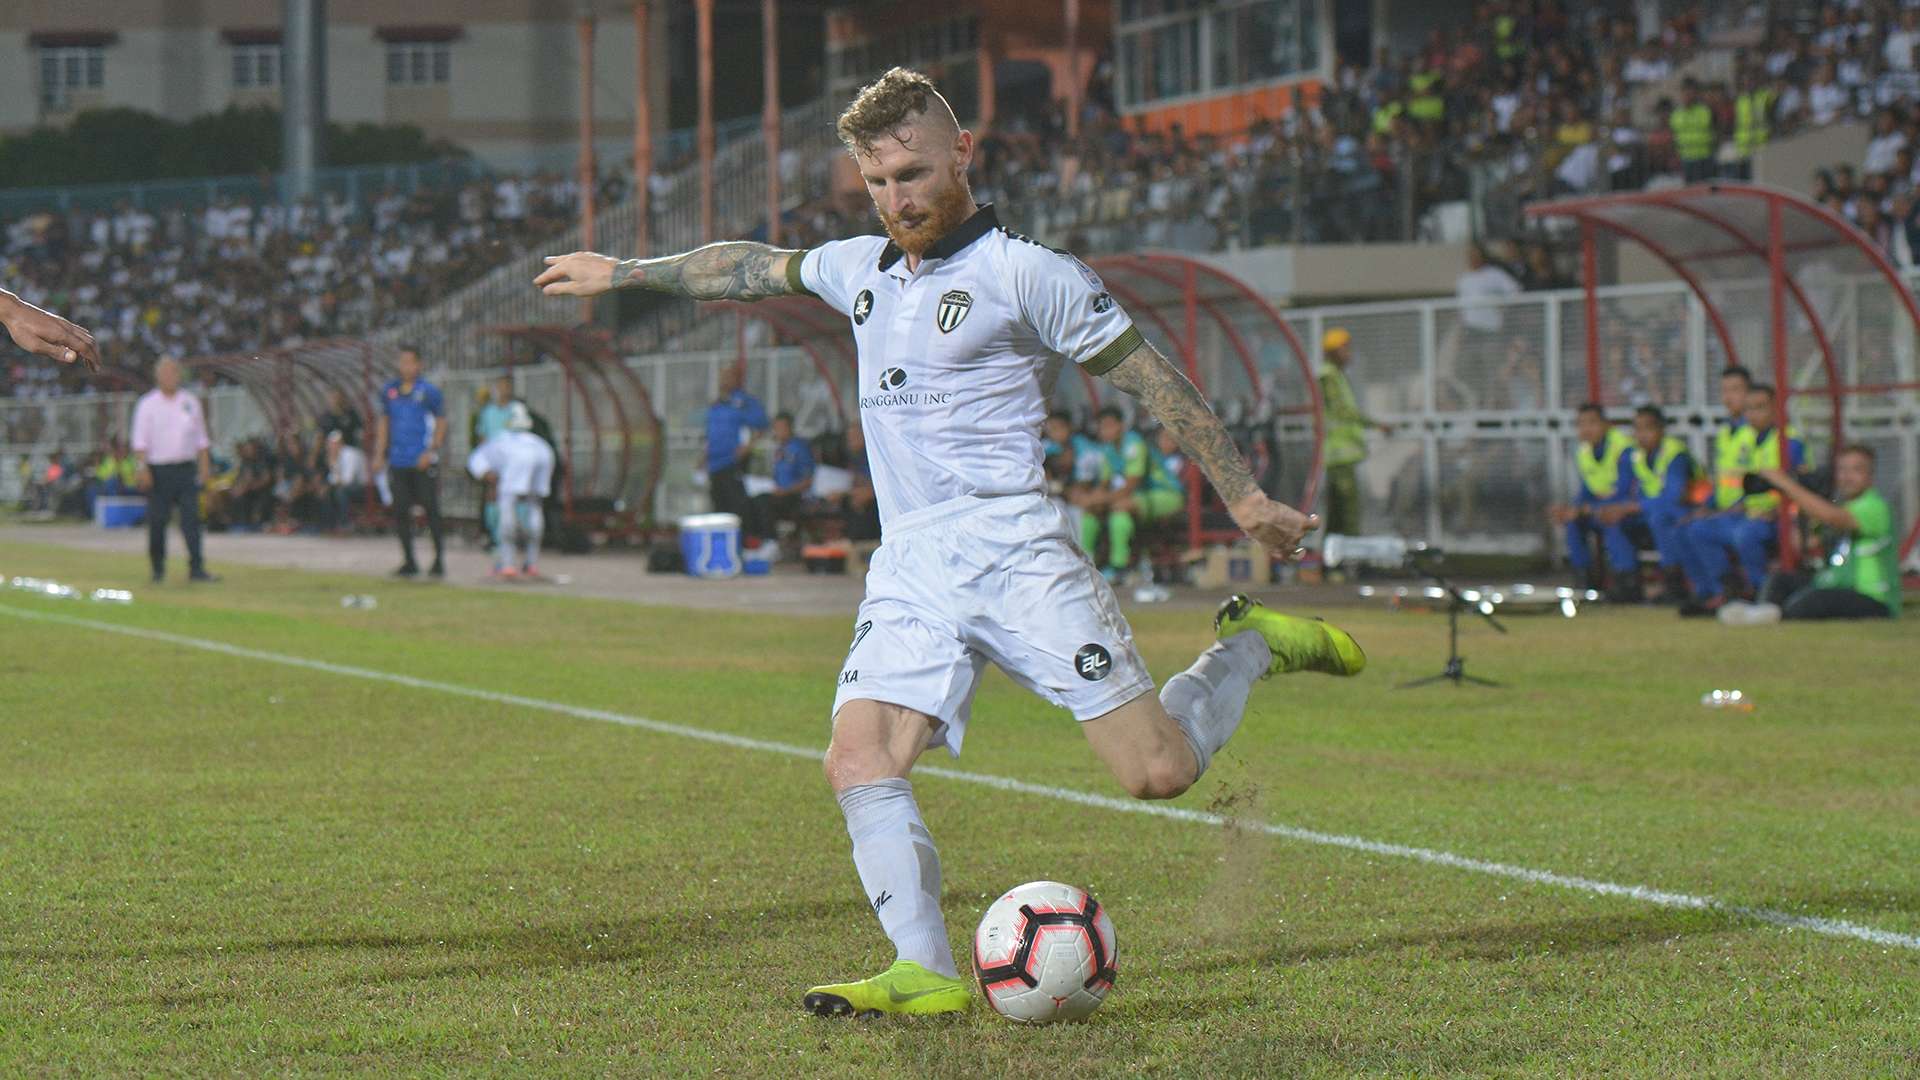 Lee Tuck, Terengganu v Johor Darul Ta'zim, Super League, 15 Feb 2019